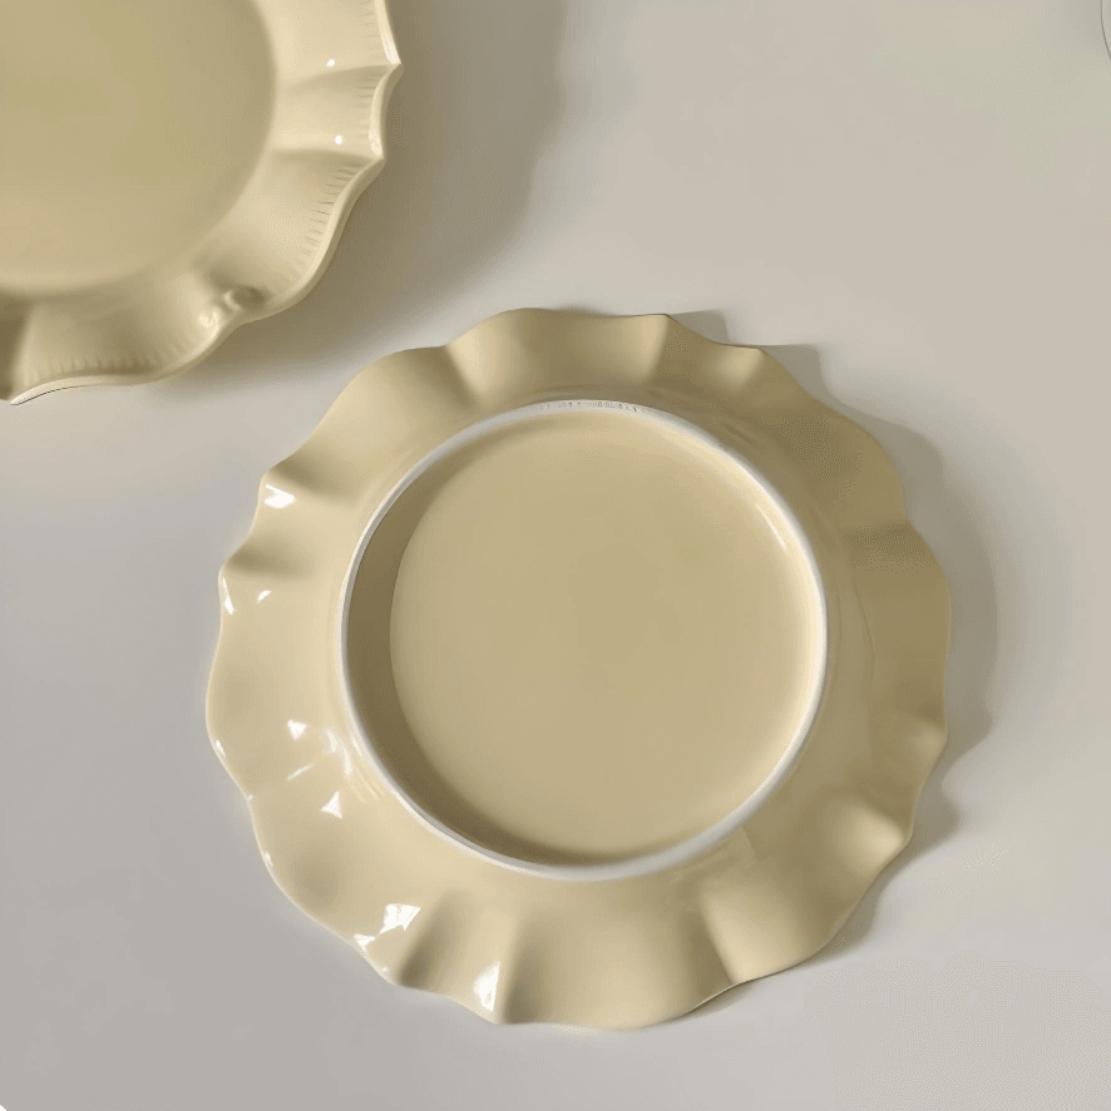 Cream yellow vintage porcelain tableware plate